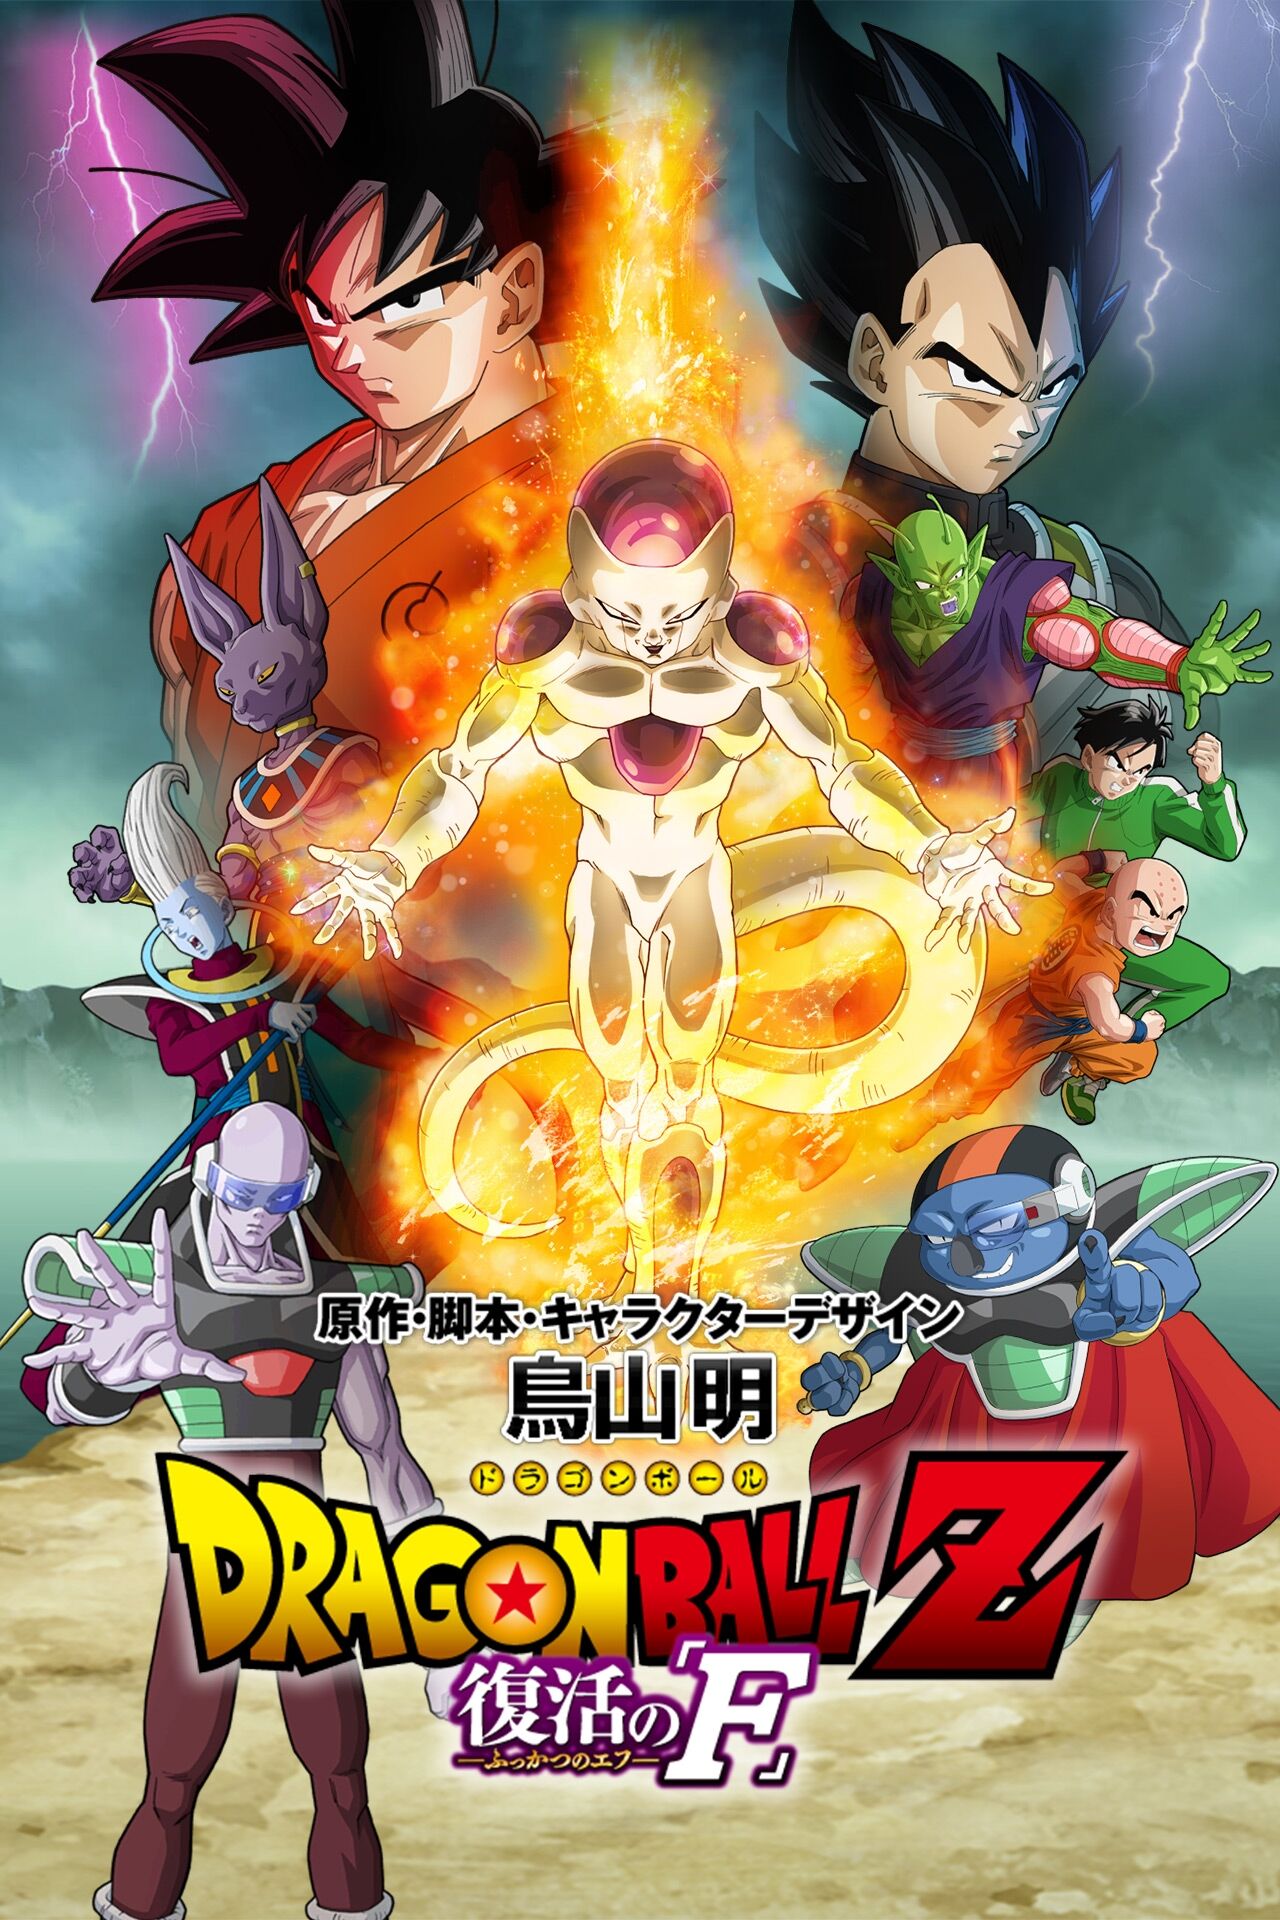 Anime Dragon Ball Z: Resurrection of F Wallpaper